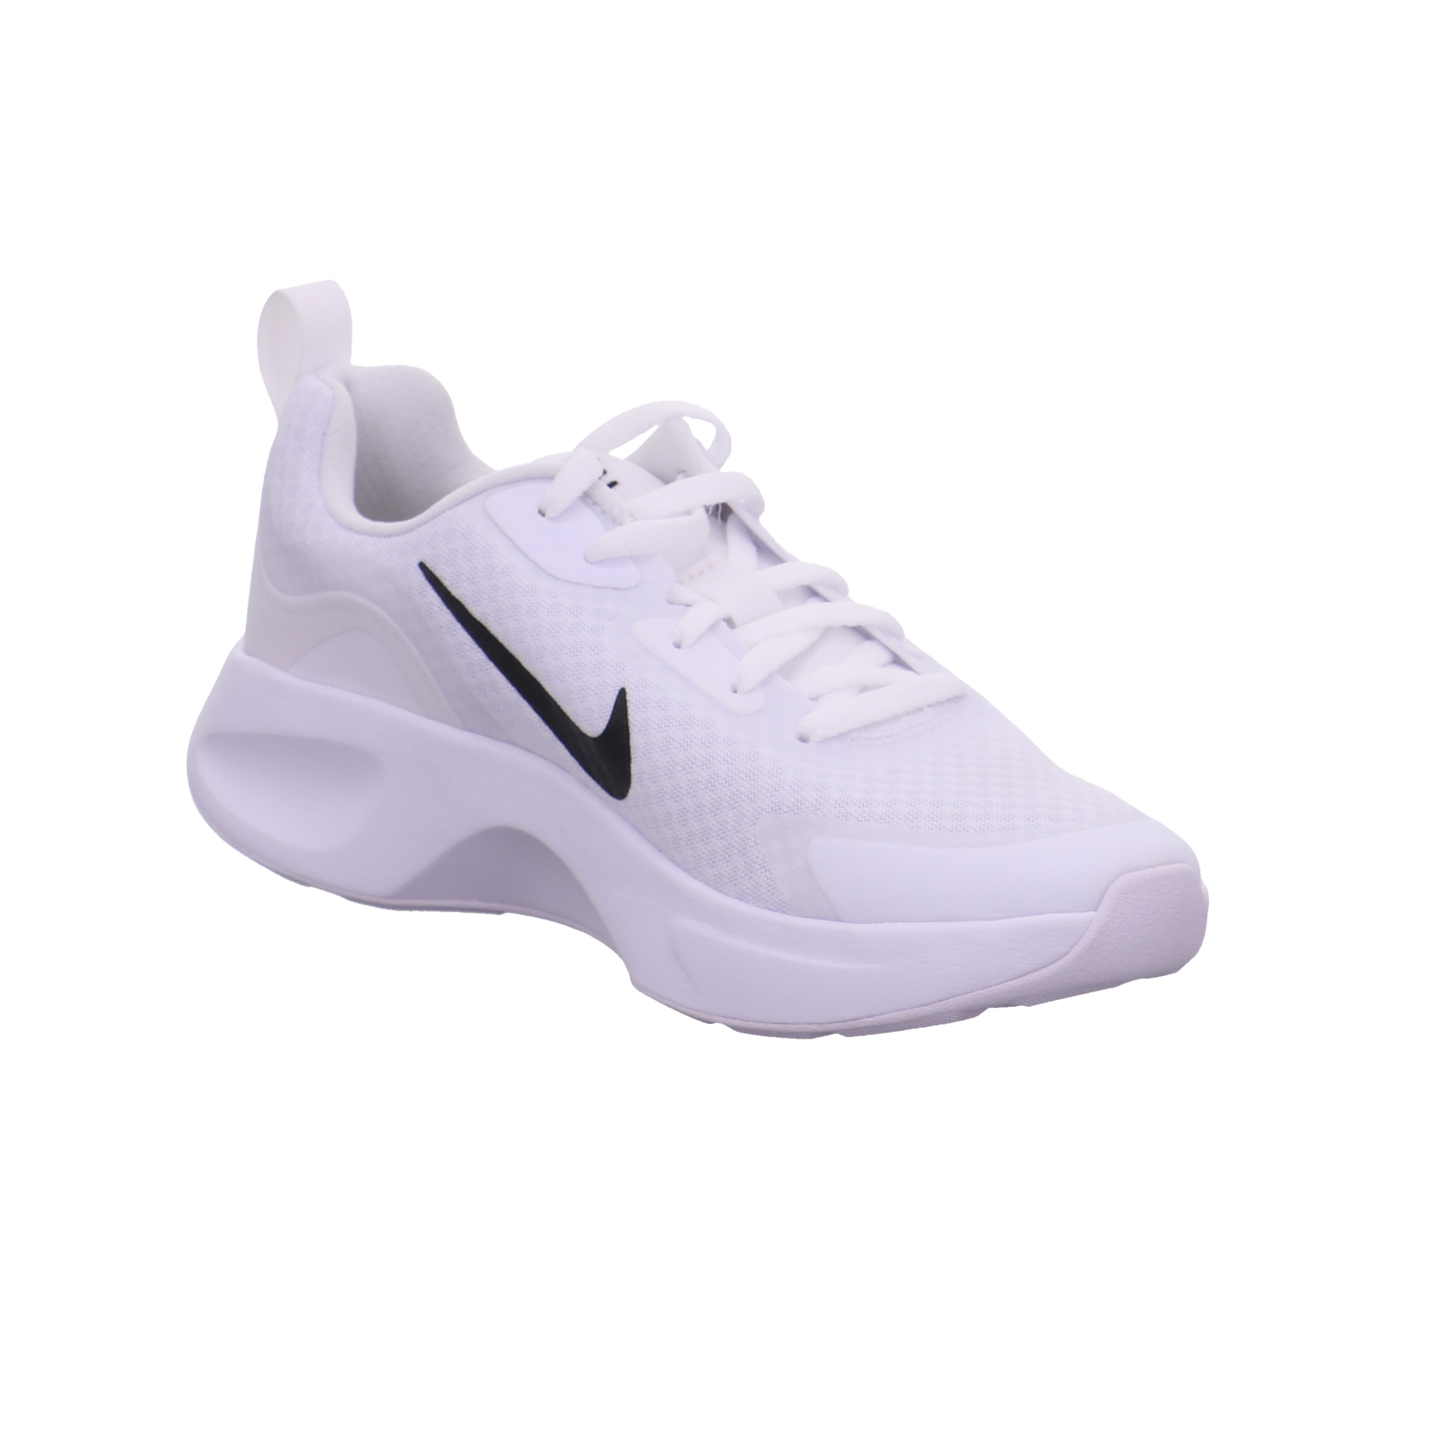 Nike Sneaker weiß-schwarz Bild7